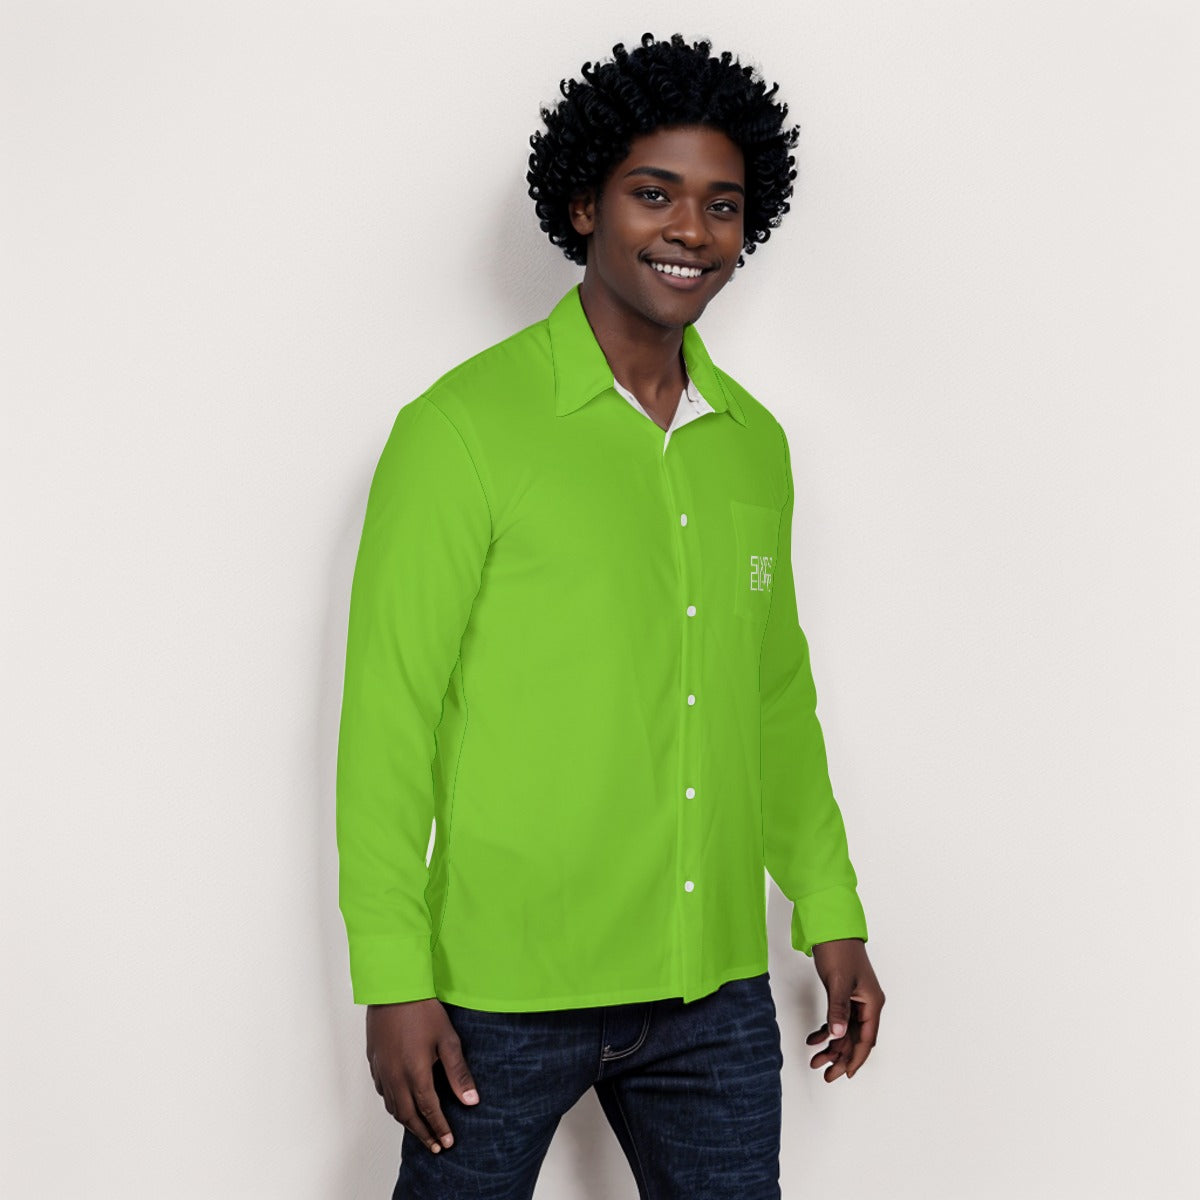 Sixty Eight 93 Logo White Green Apple Men's Long Sleeve Shirt